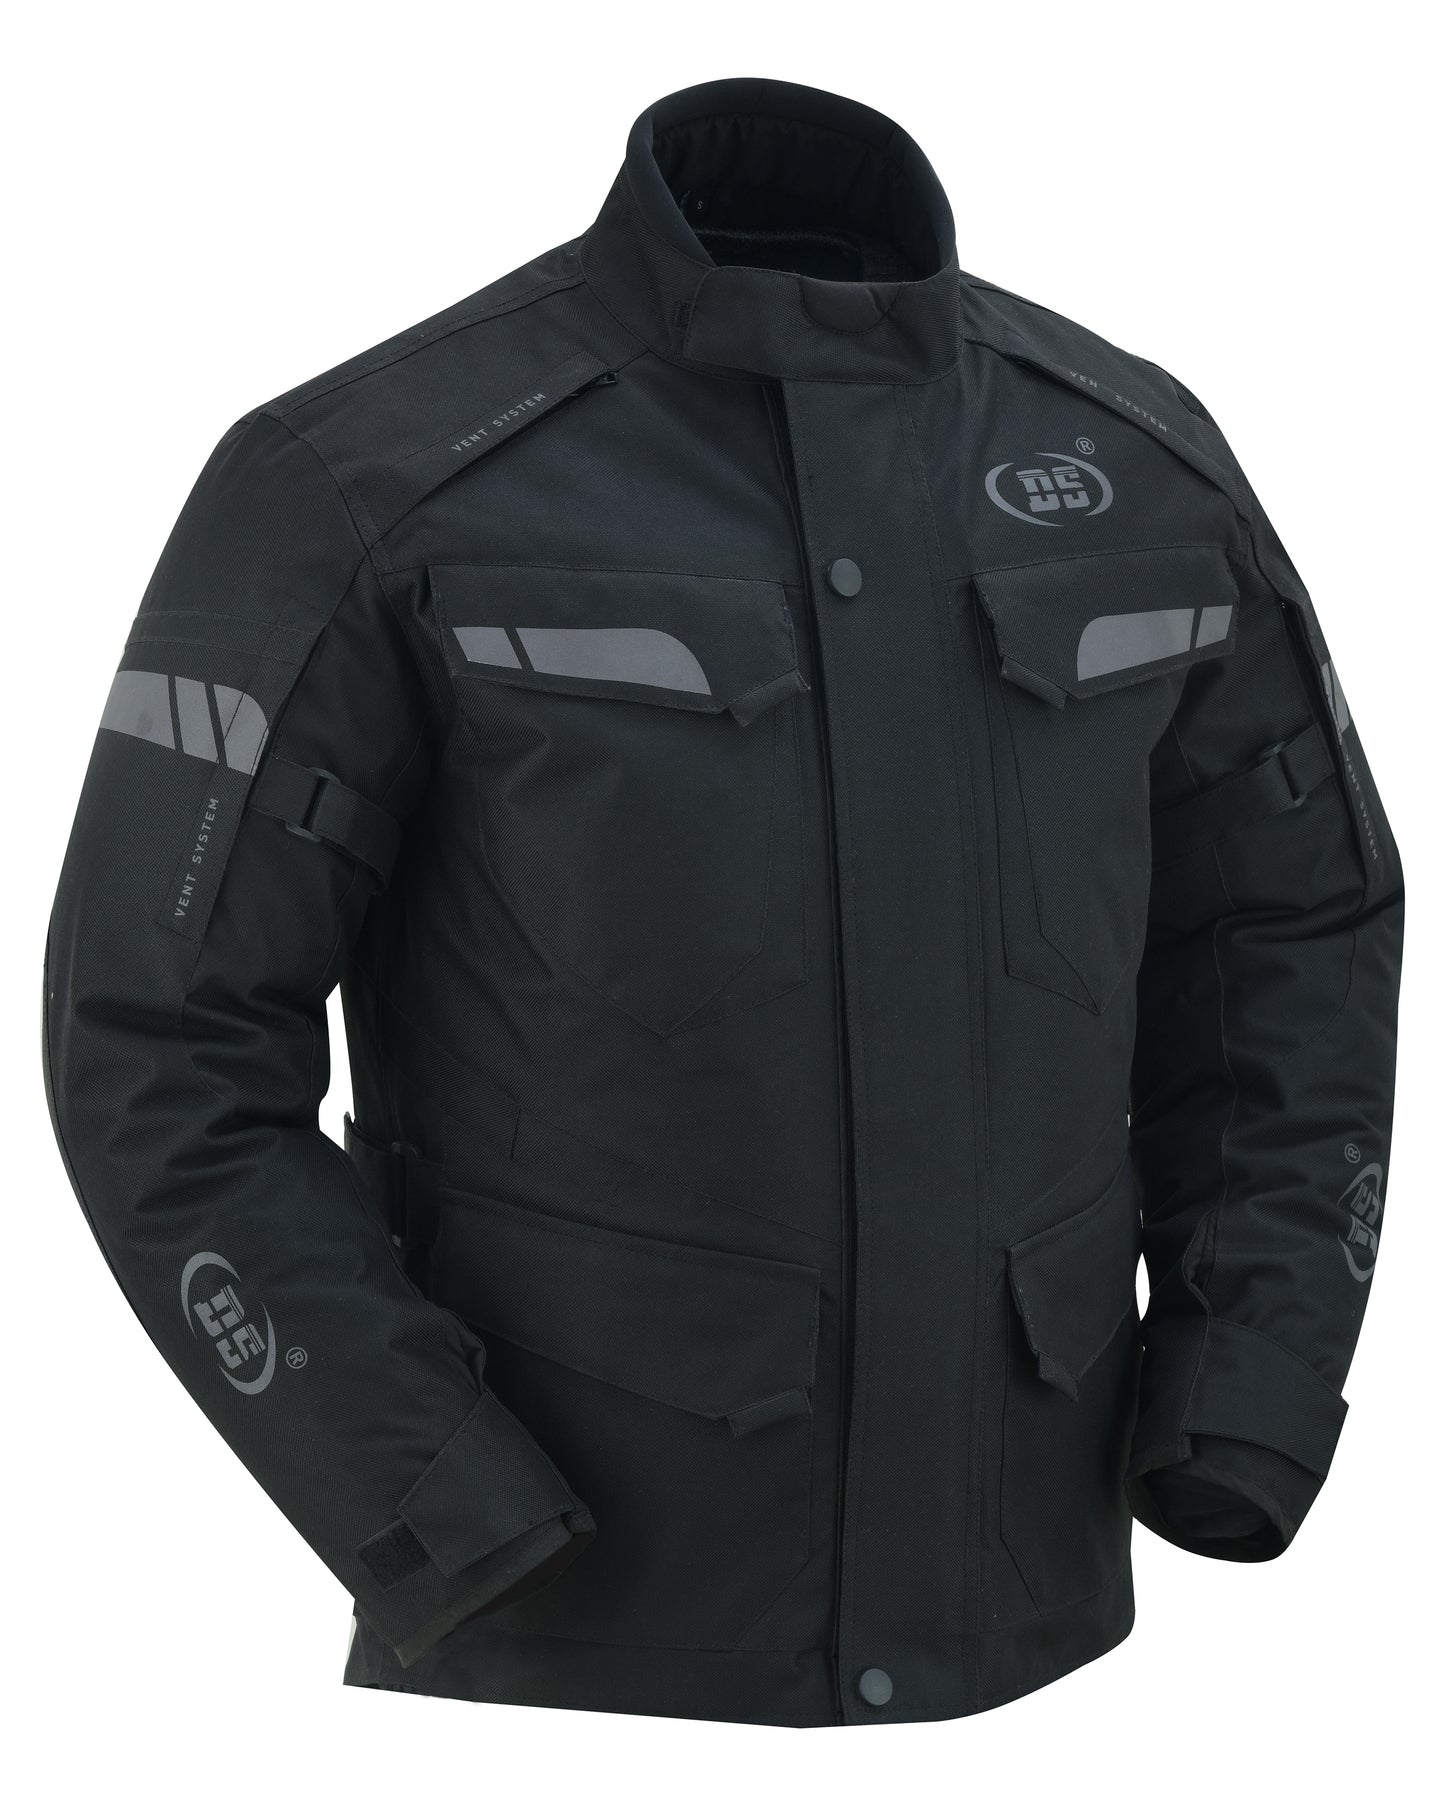 Advance Touring Textile Motorcycle Jacket for Men – Black